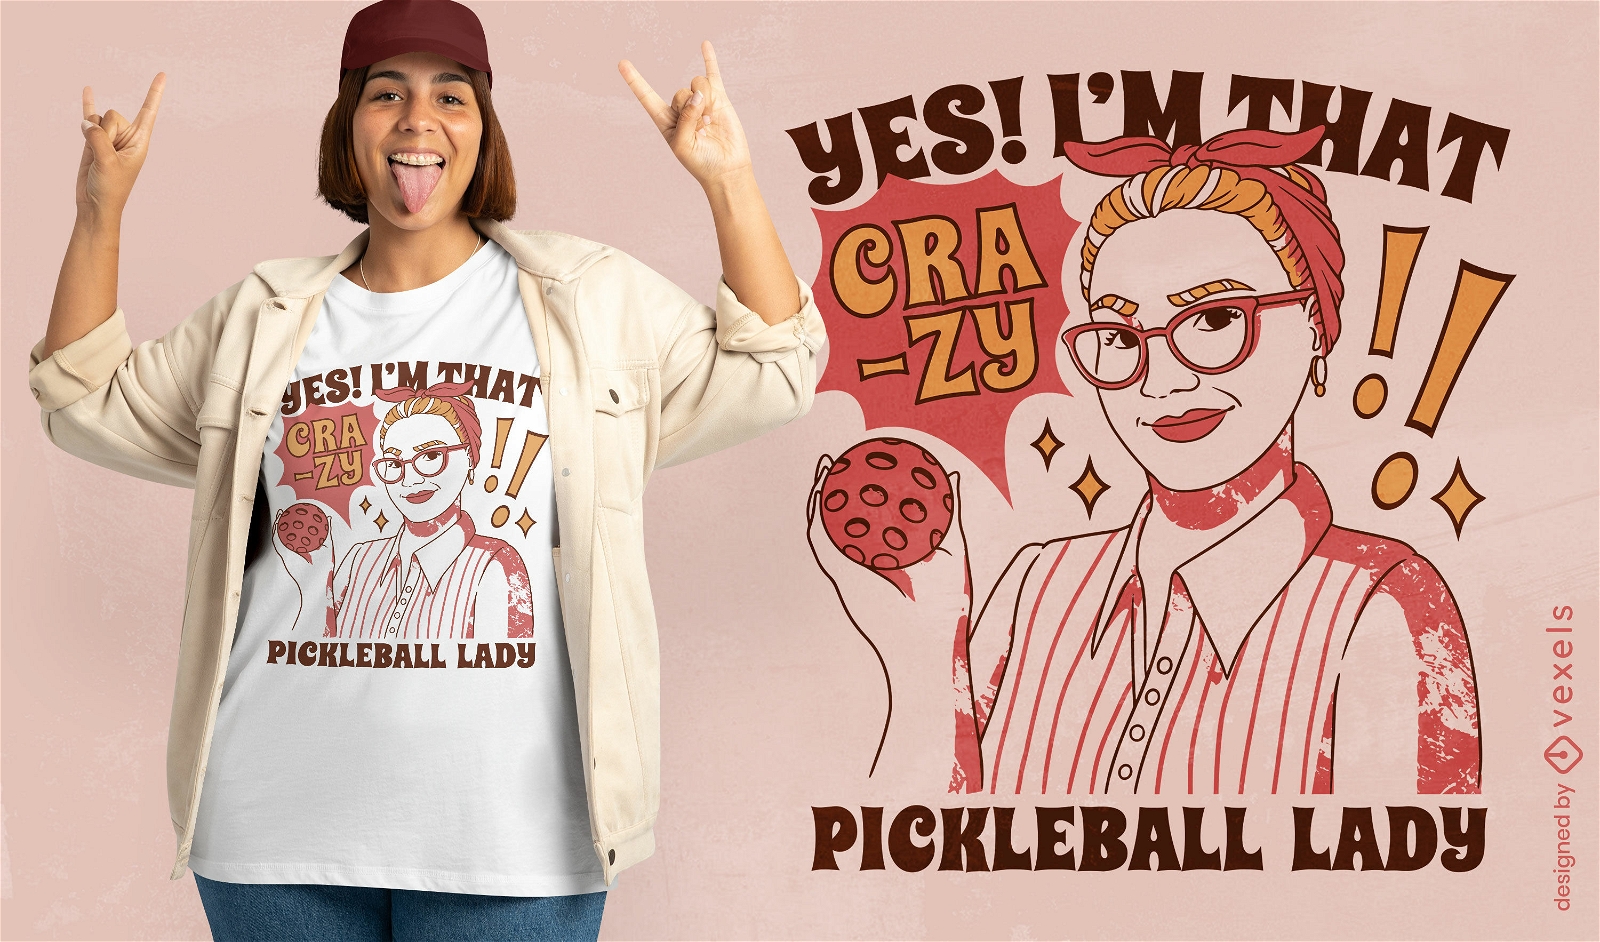 Pickleball lady t-shirt design